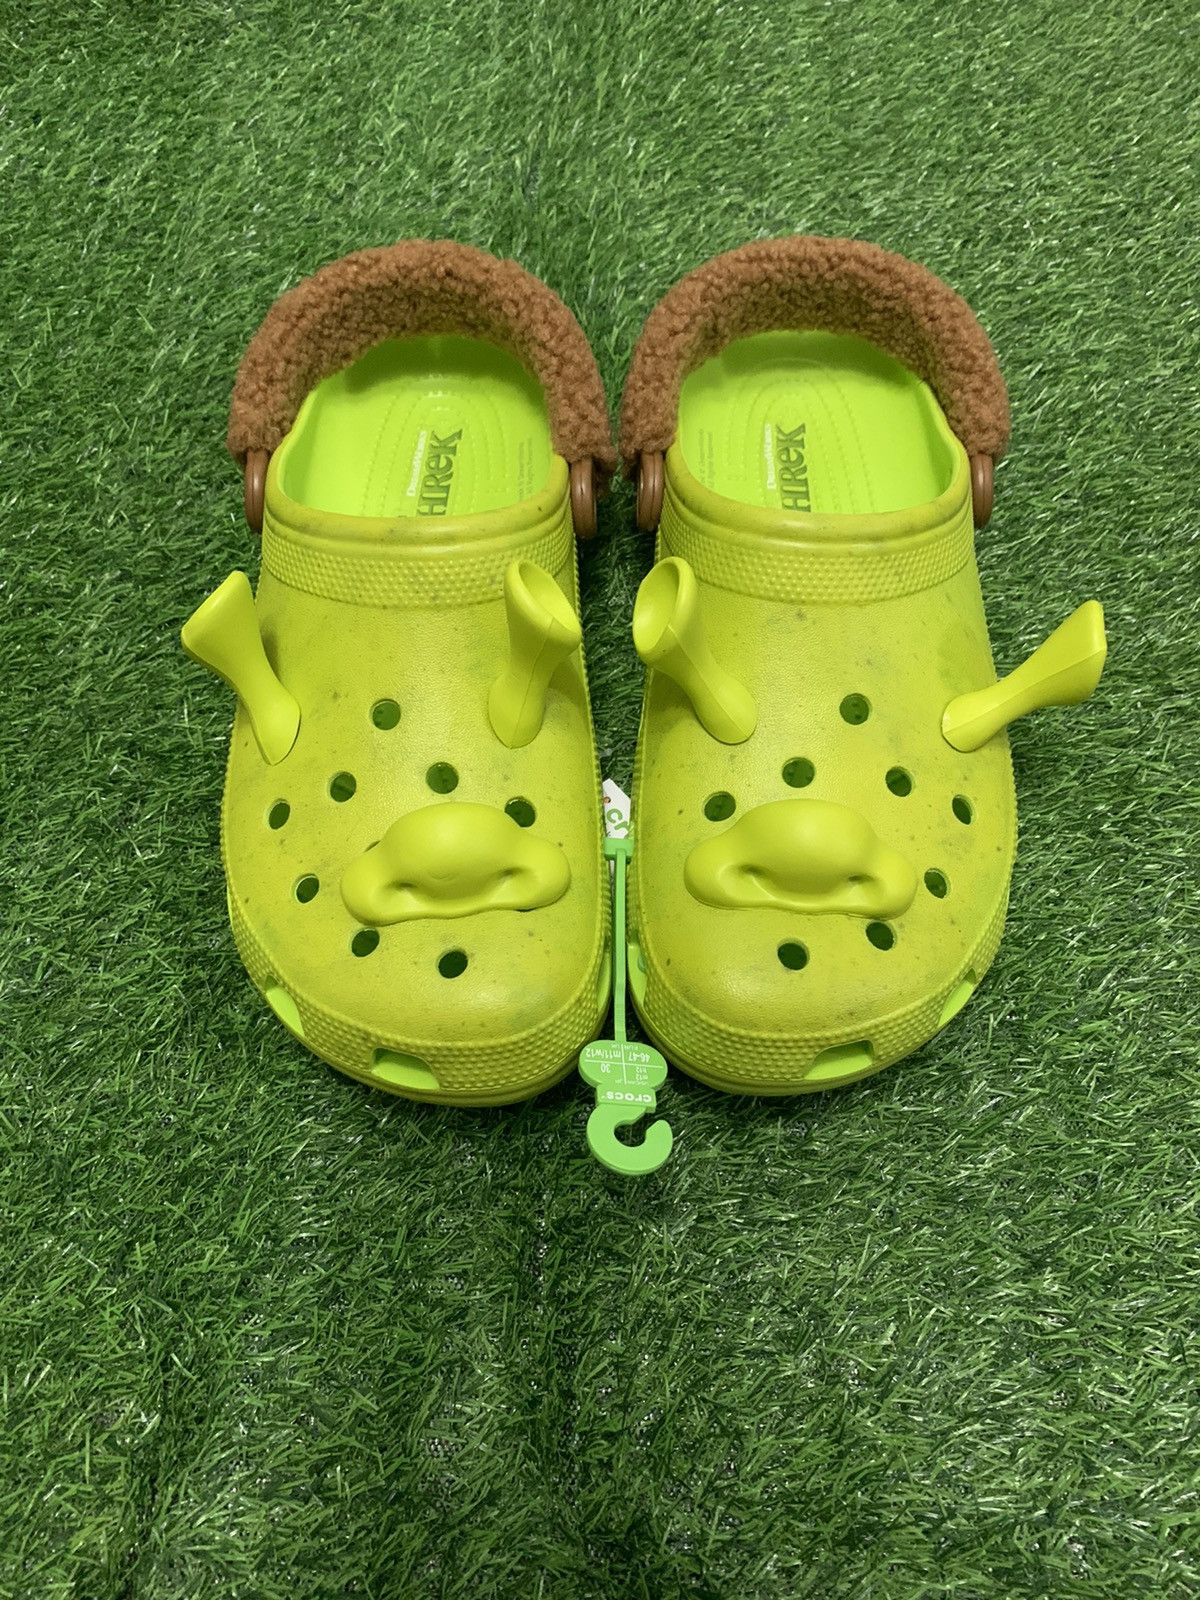 Dreamworks Shrek Crocs Size 12 SHIPS TODAY